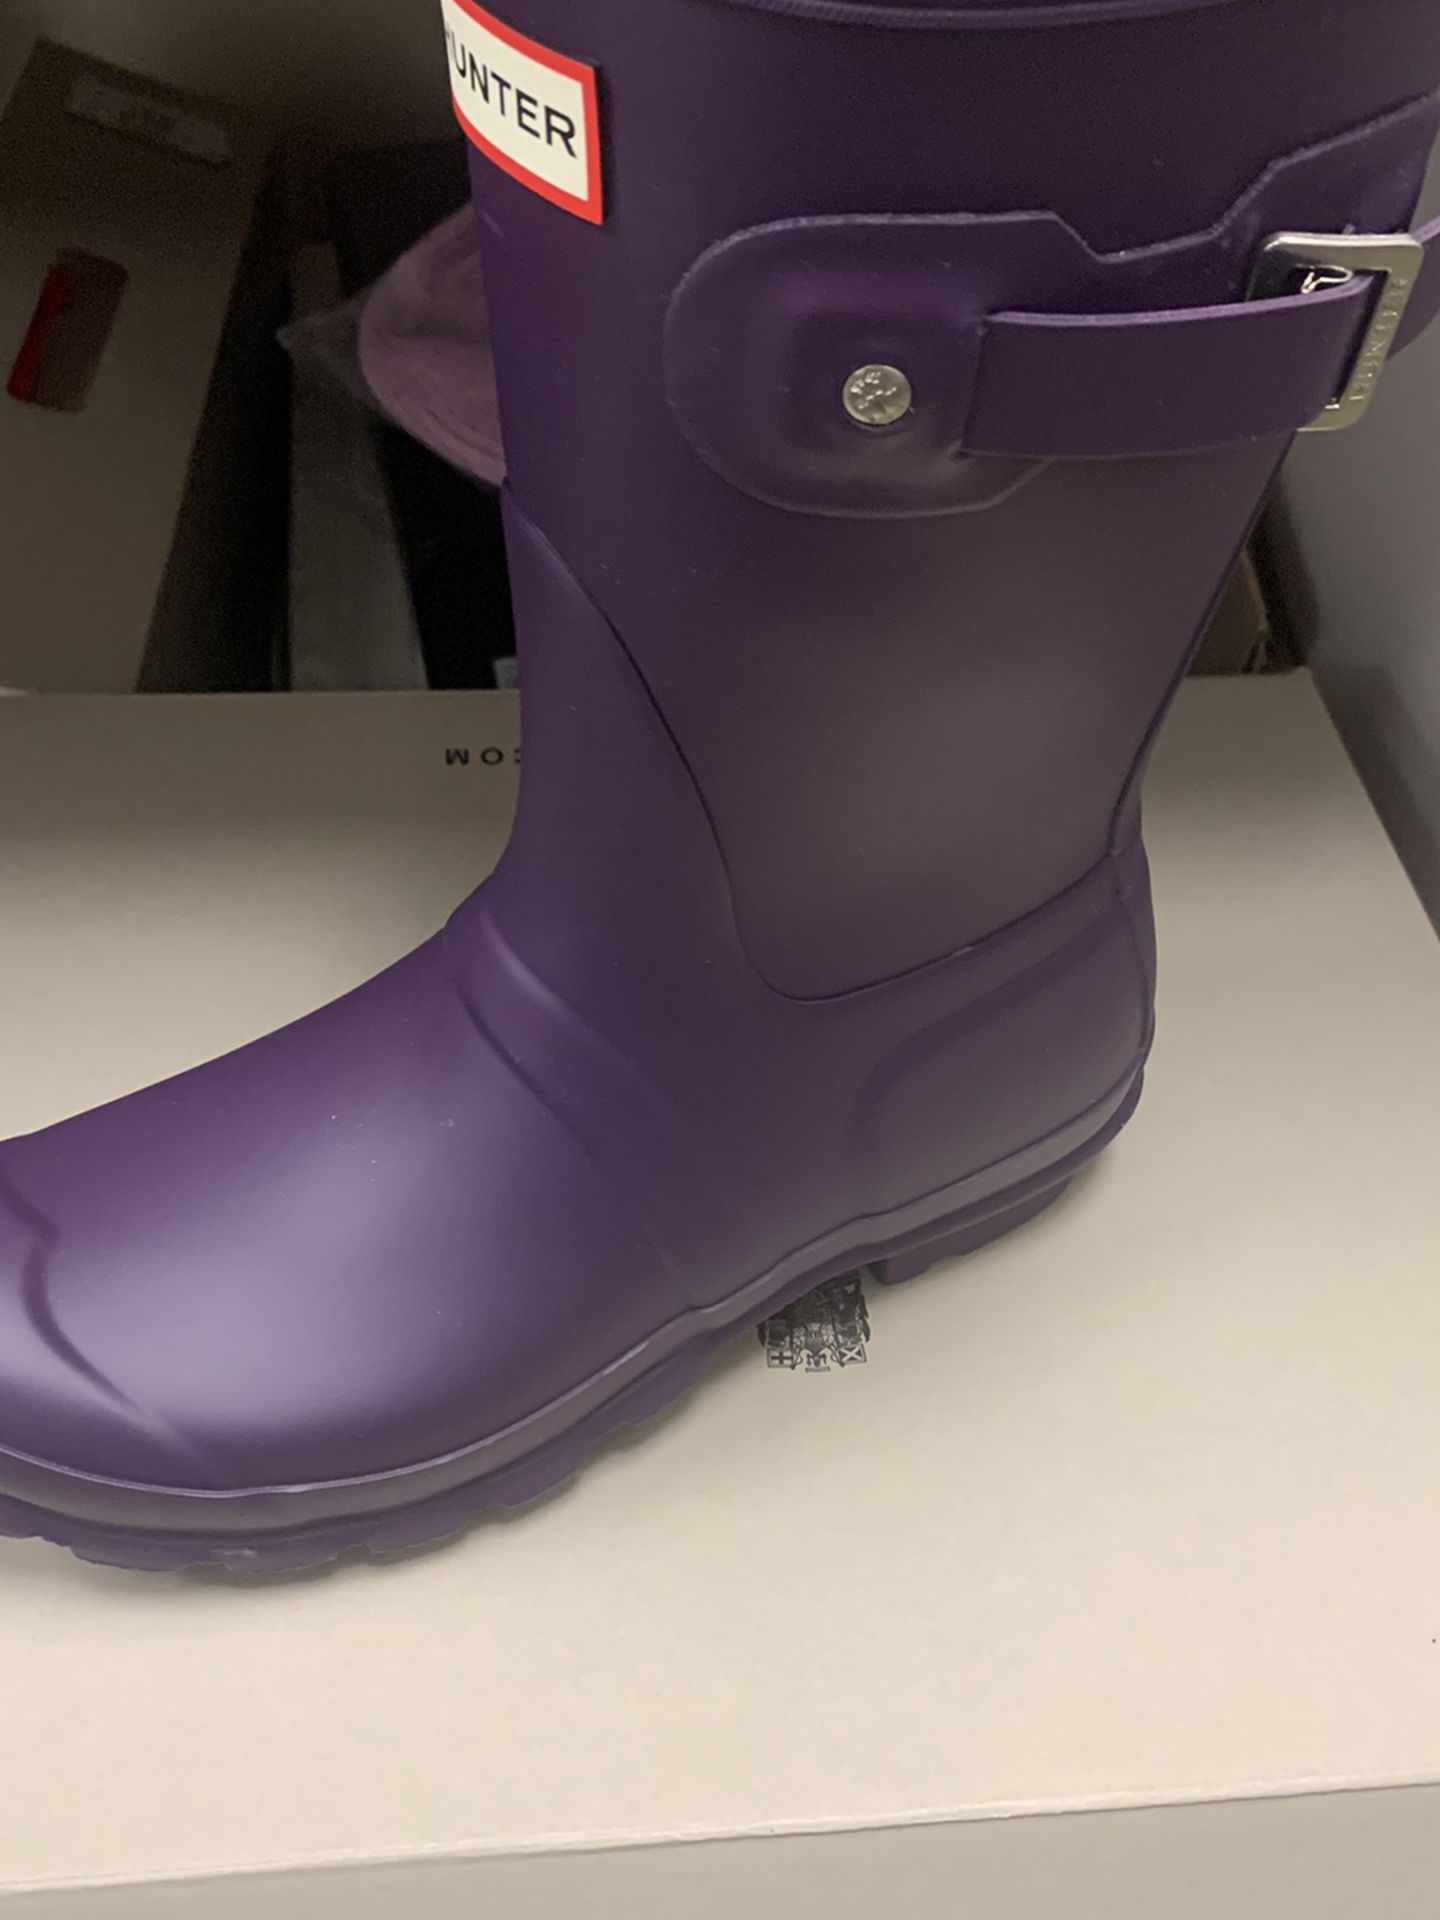 HUNTER Original Short Waterproof Rain Boots / Cavendish Bue Blue, Looks Like An Eggplant Purple / Size 7